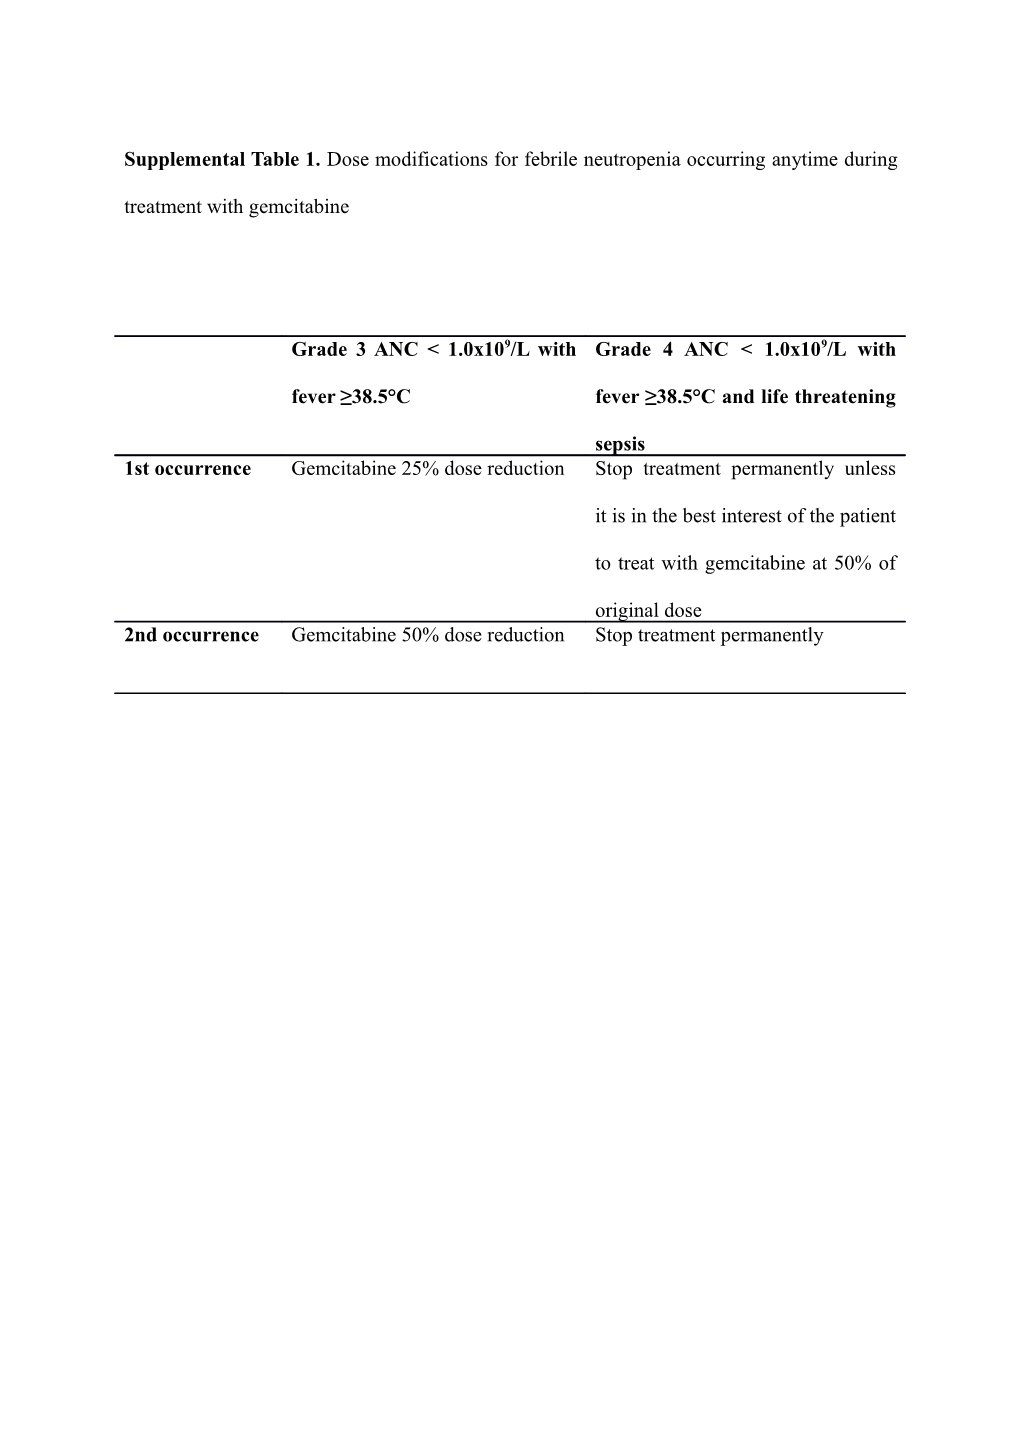 Supplemental Table 2. Gemcitabine Dose Adjustments for Neutropenia